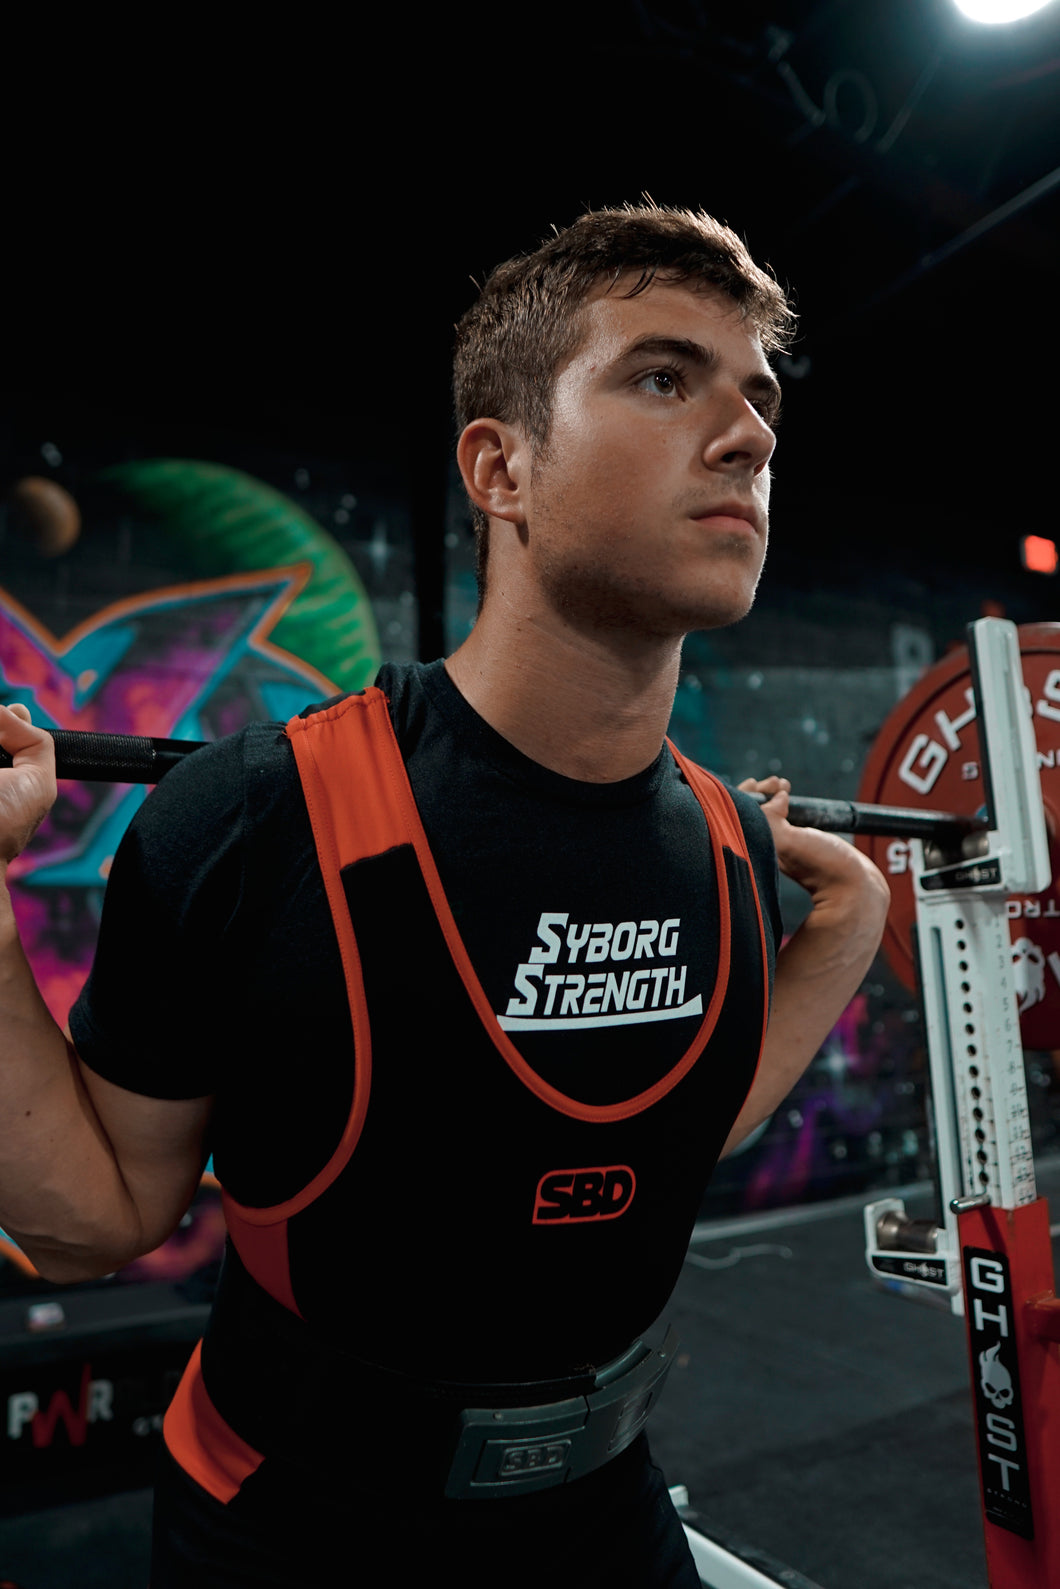 Syborg Strength Competition Shirt